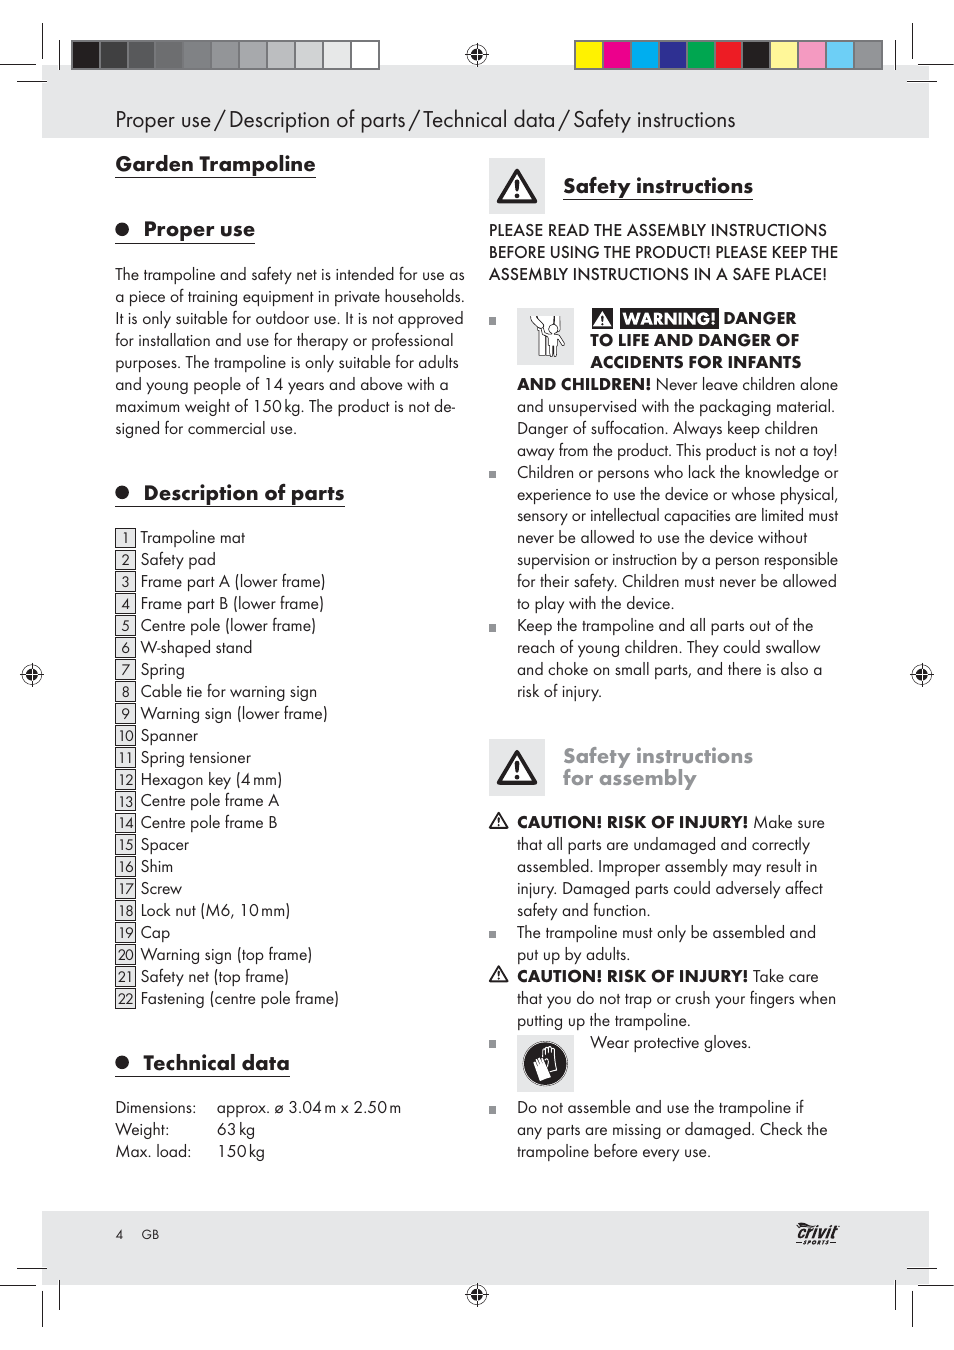 Garden trampoline proper use, Description of parts, Technical data | Crivit  Z30751 User Manual | Page 4 / 57 | Original mode